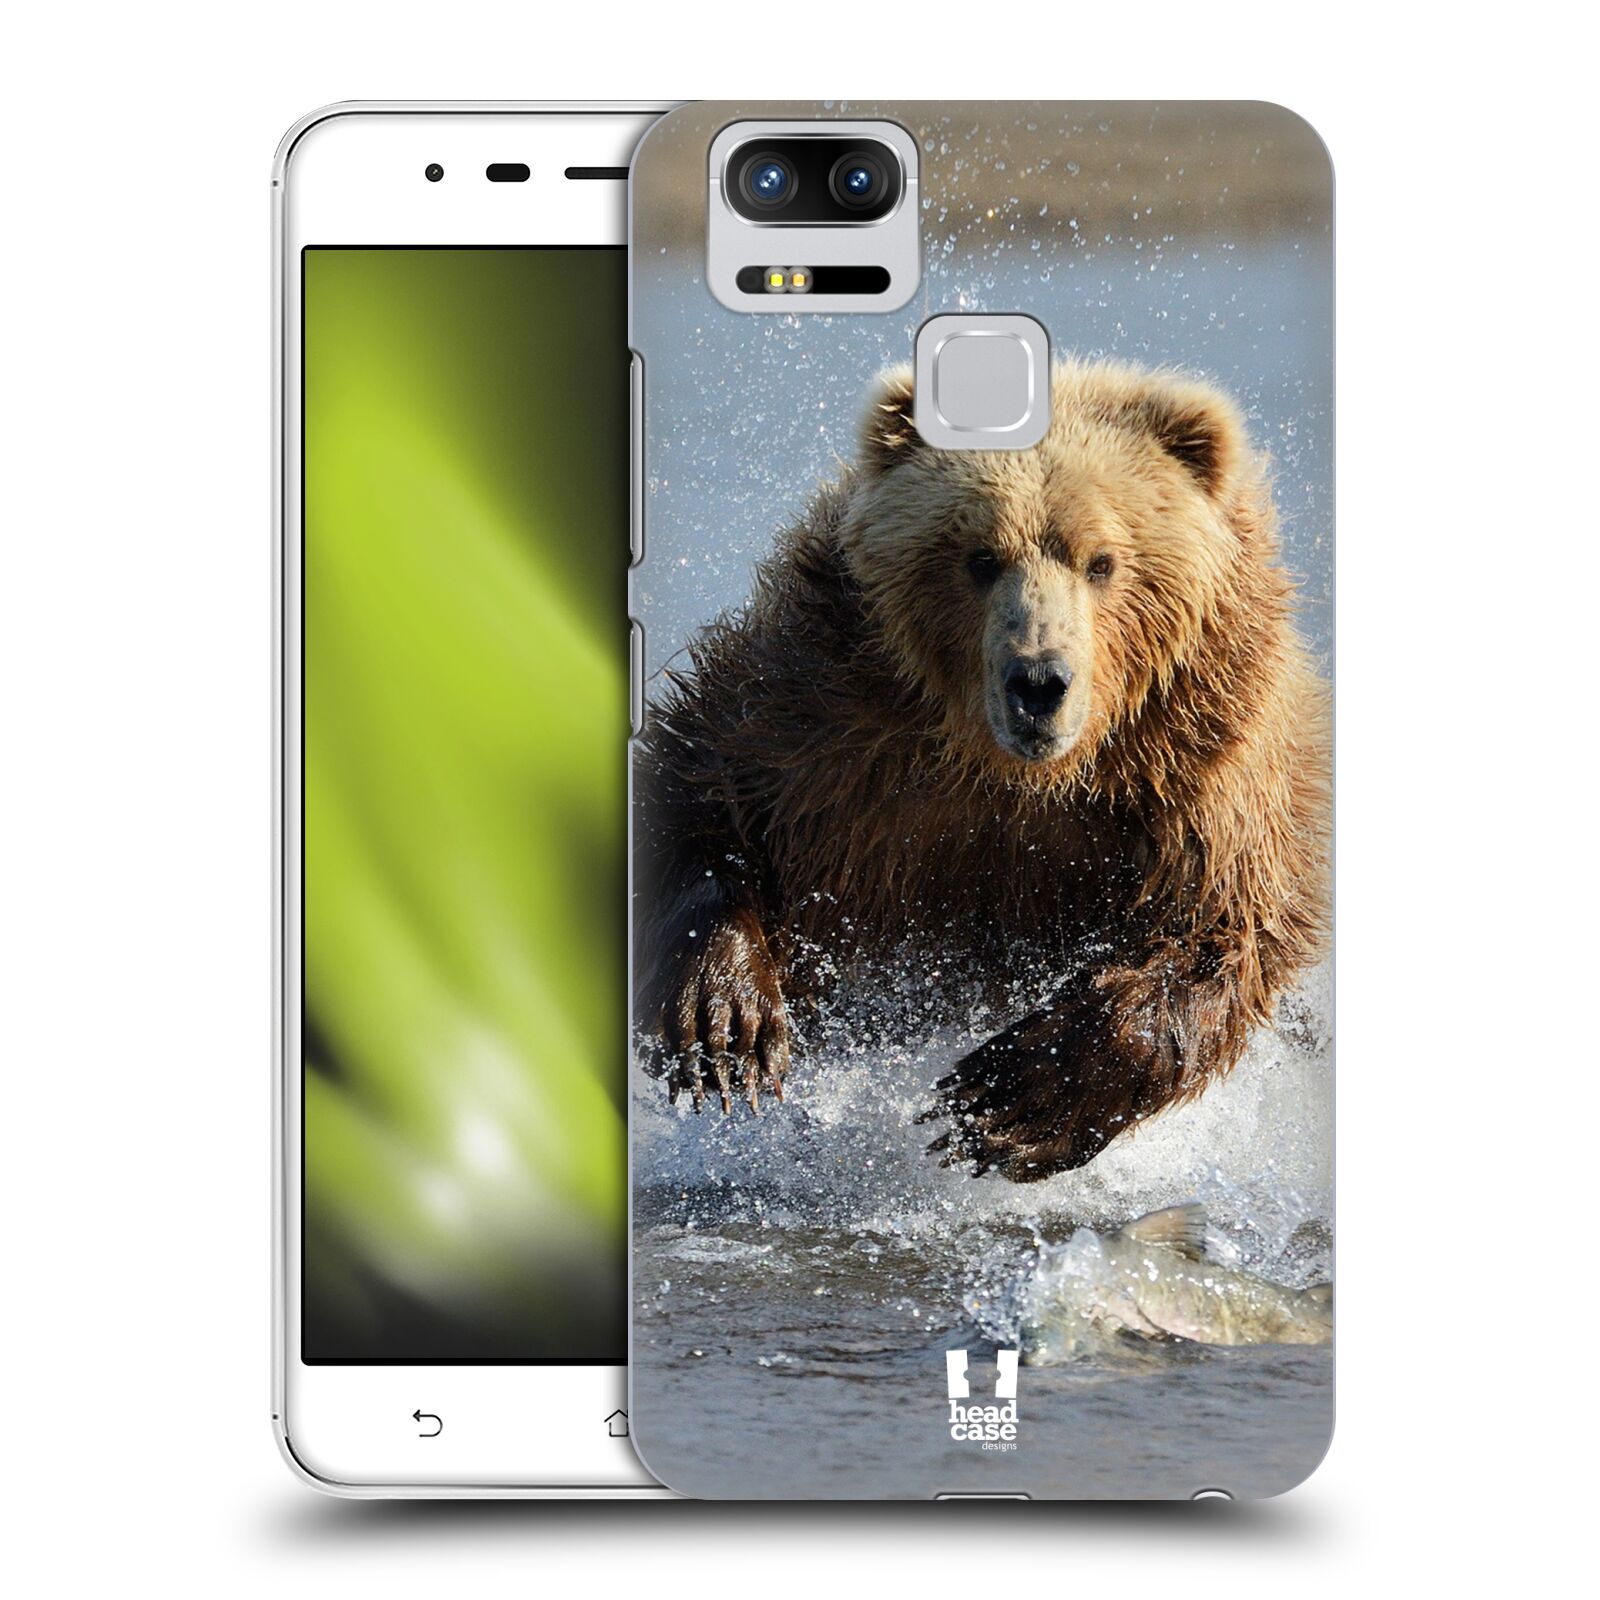 HEAD CASE plastový obal na mobil Asus Zenfone 3 Zoom ZE553KL vzor Divočina, Divoký život a zvířata foto MEDVĚD GRIZZLY HŇEDÁ